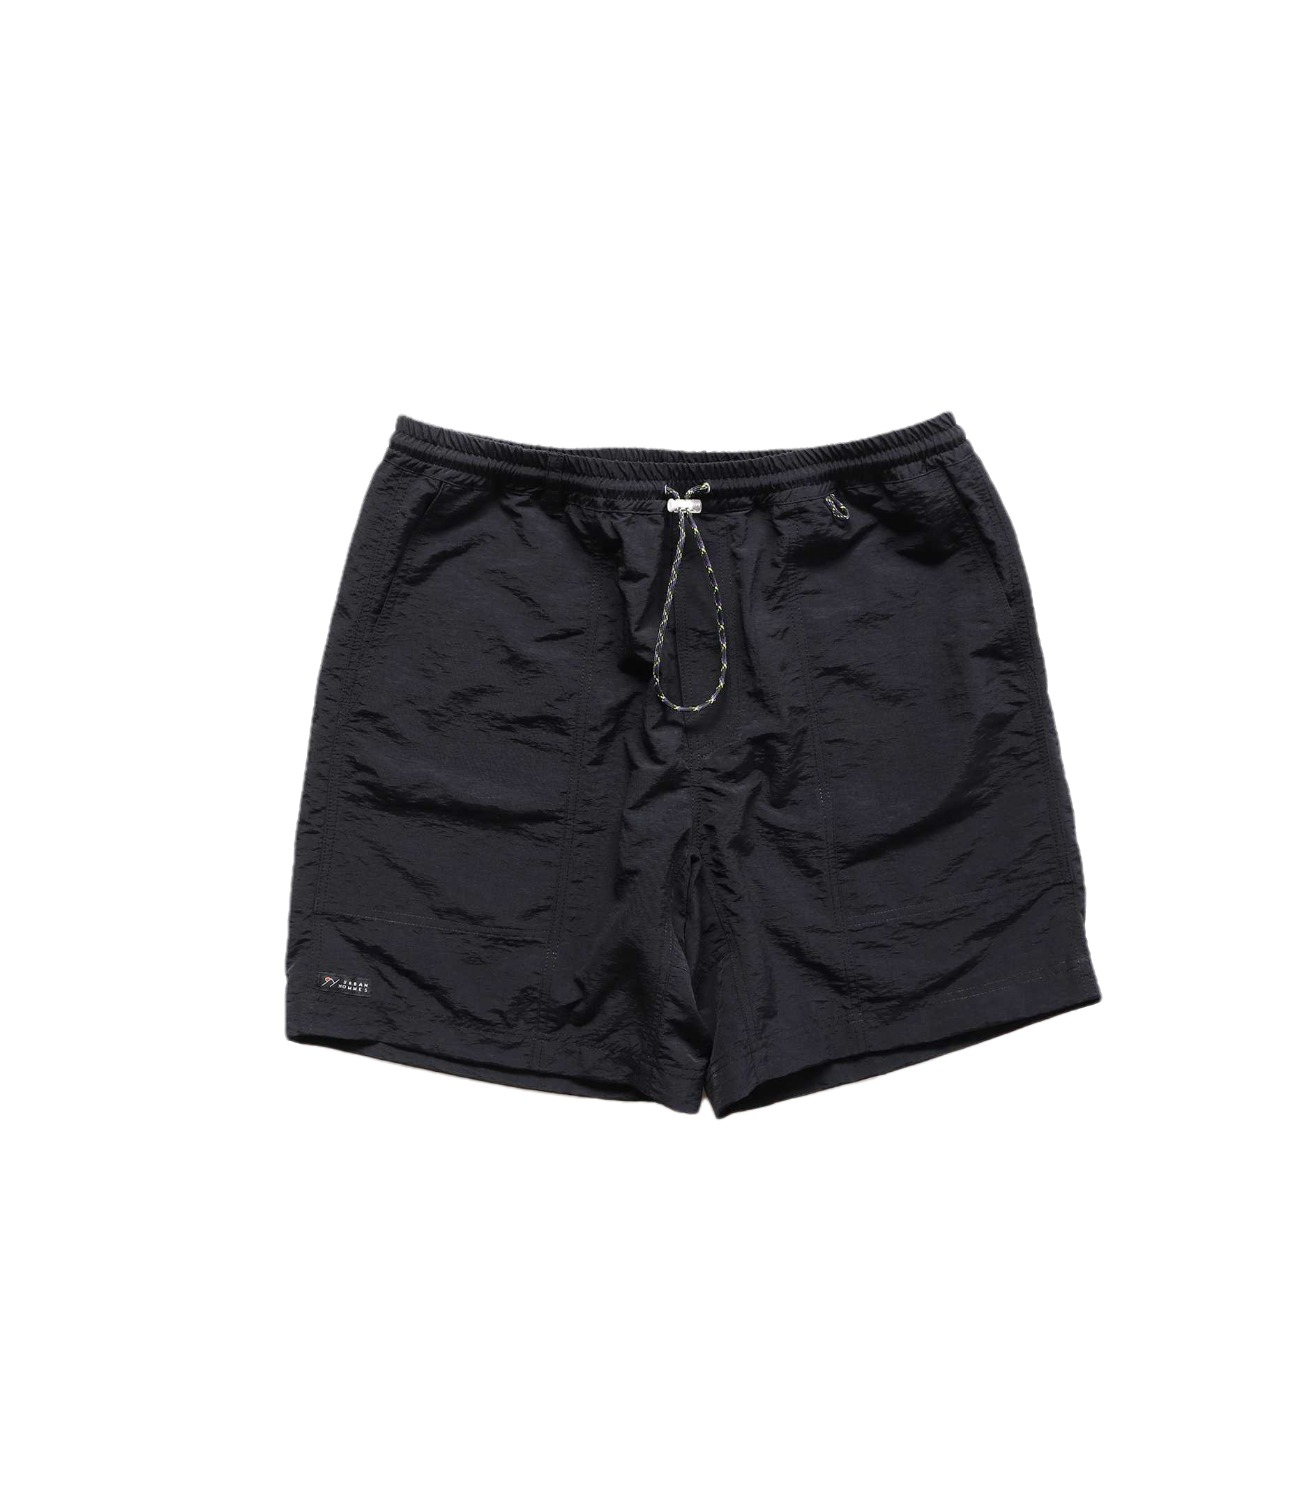 MONT Nylon Shorts (Black)